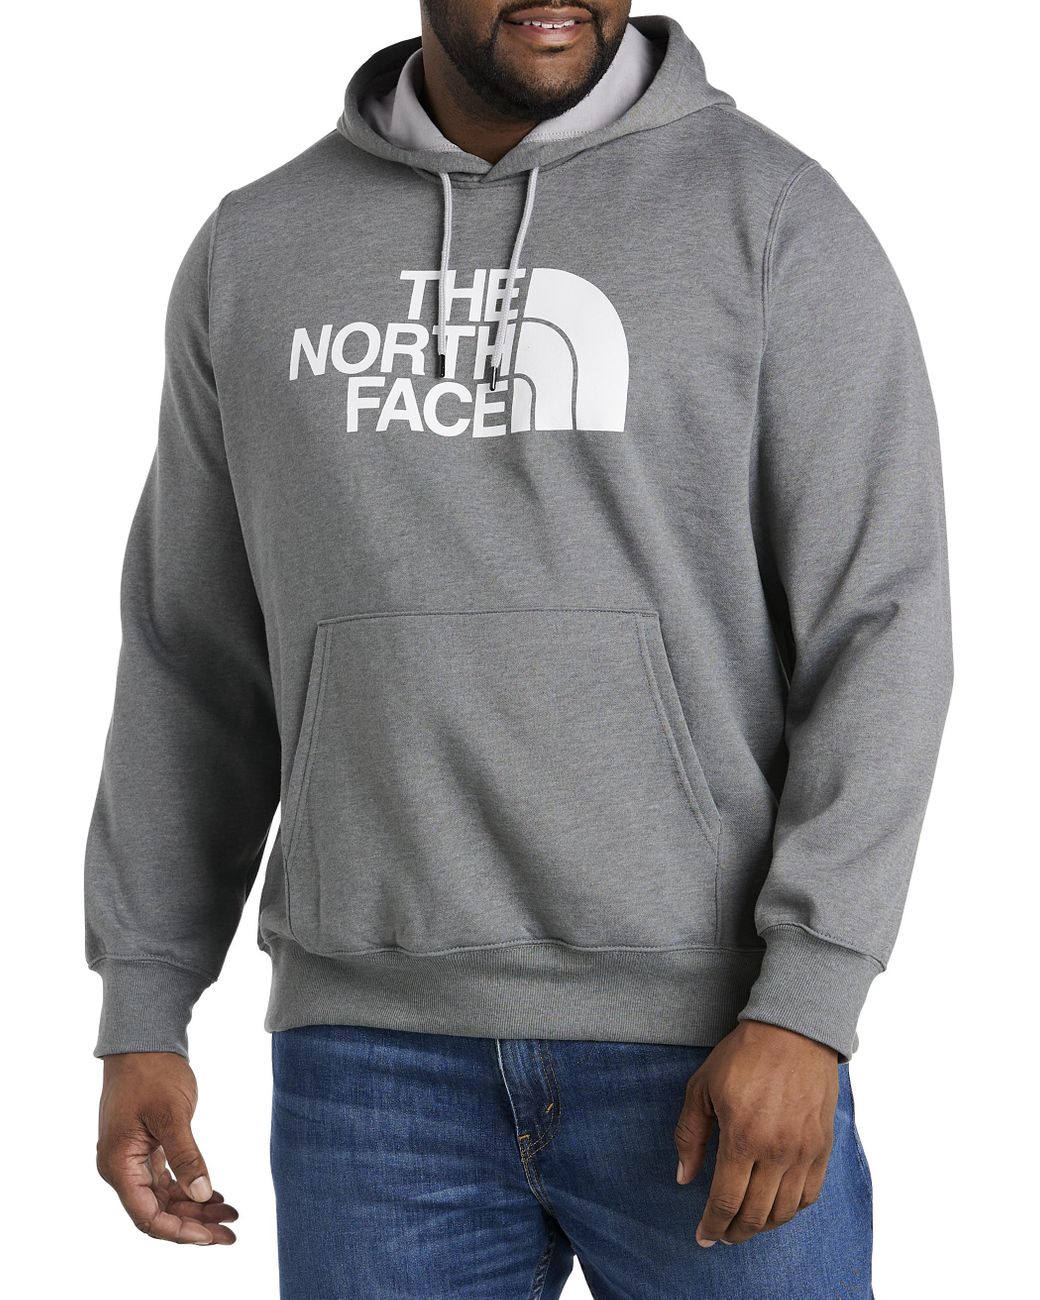 The North Face x Invincible Half Dome Graphic Hoodie Dark Grey Men's - SS21  - US